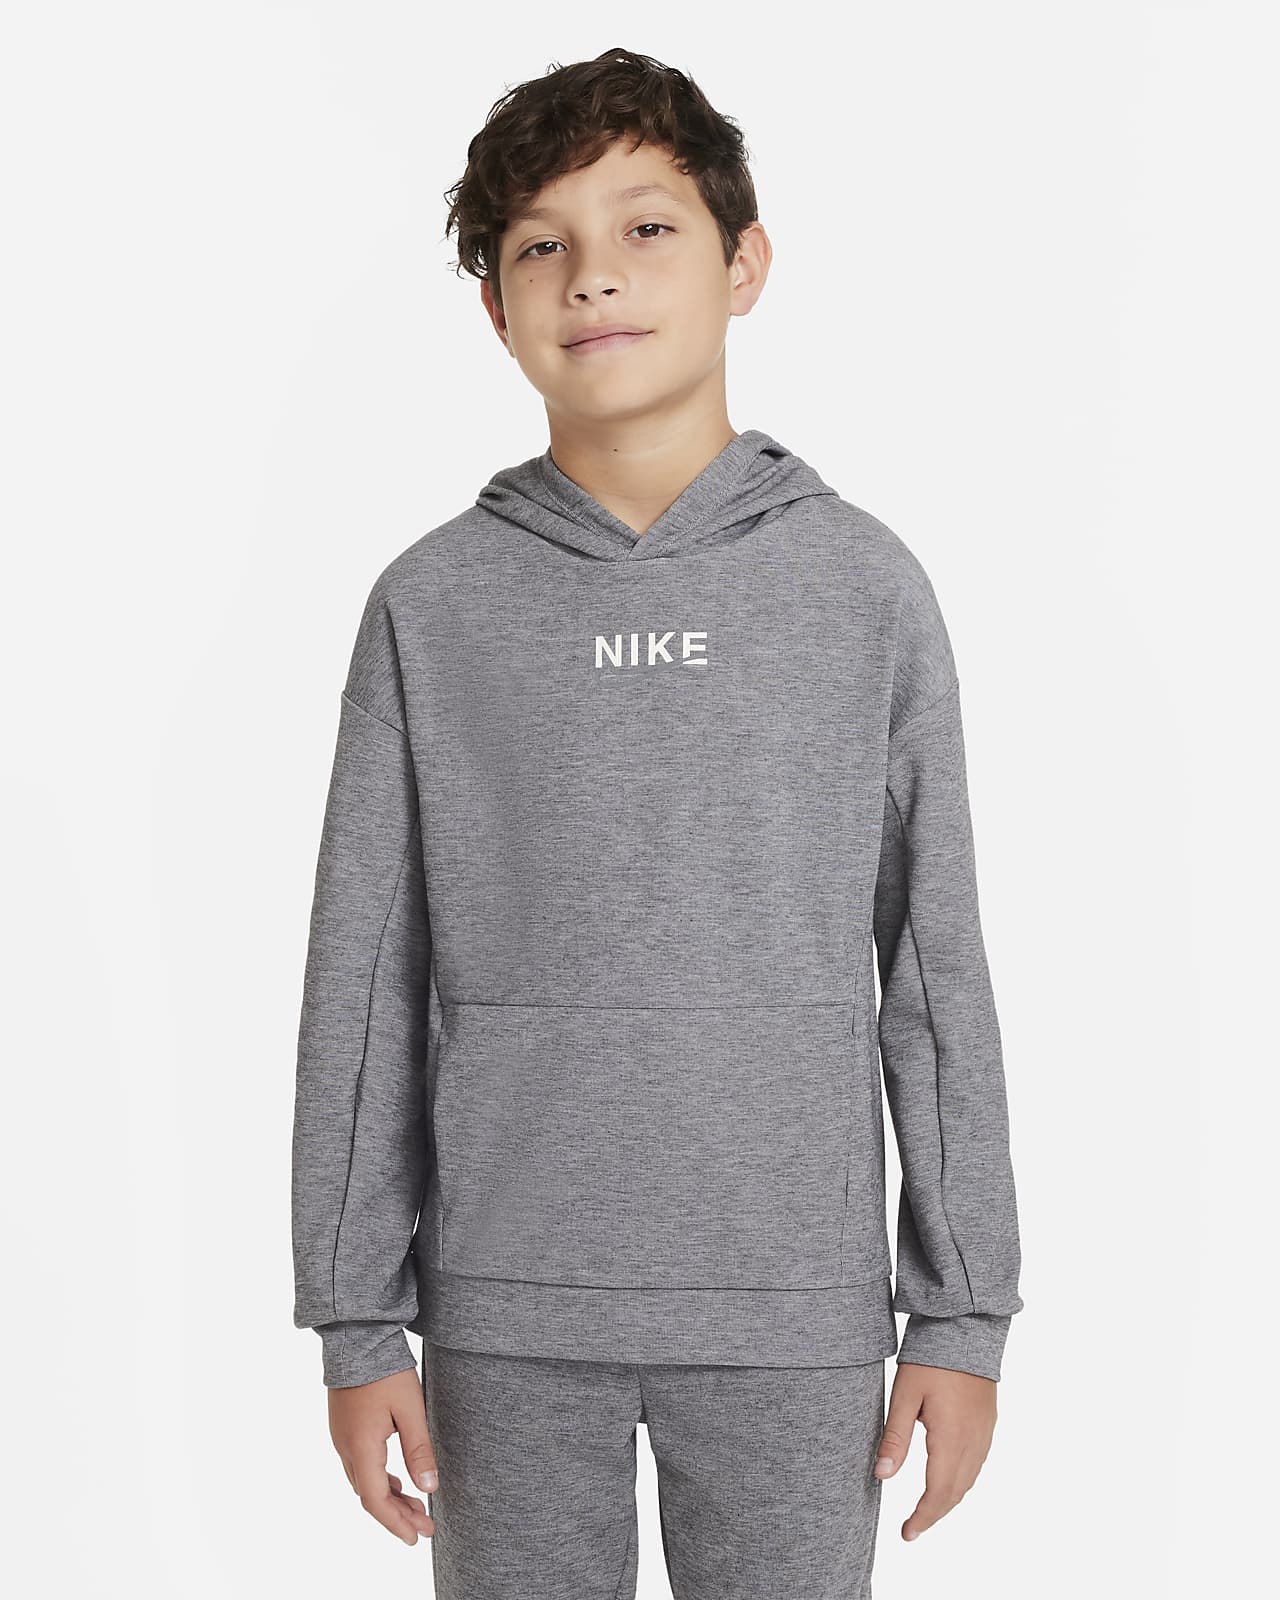 Nike Dri-FIT Performance Select Sudadera con capucha entrenamiento - Niño. Nike